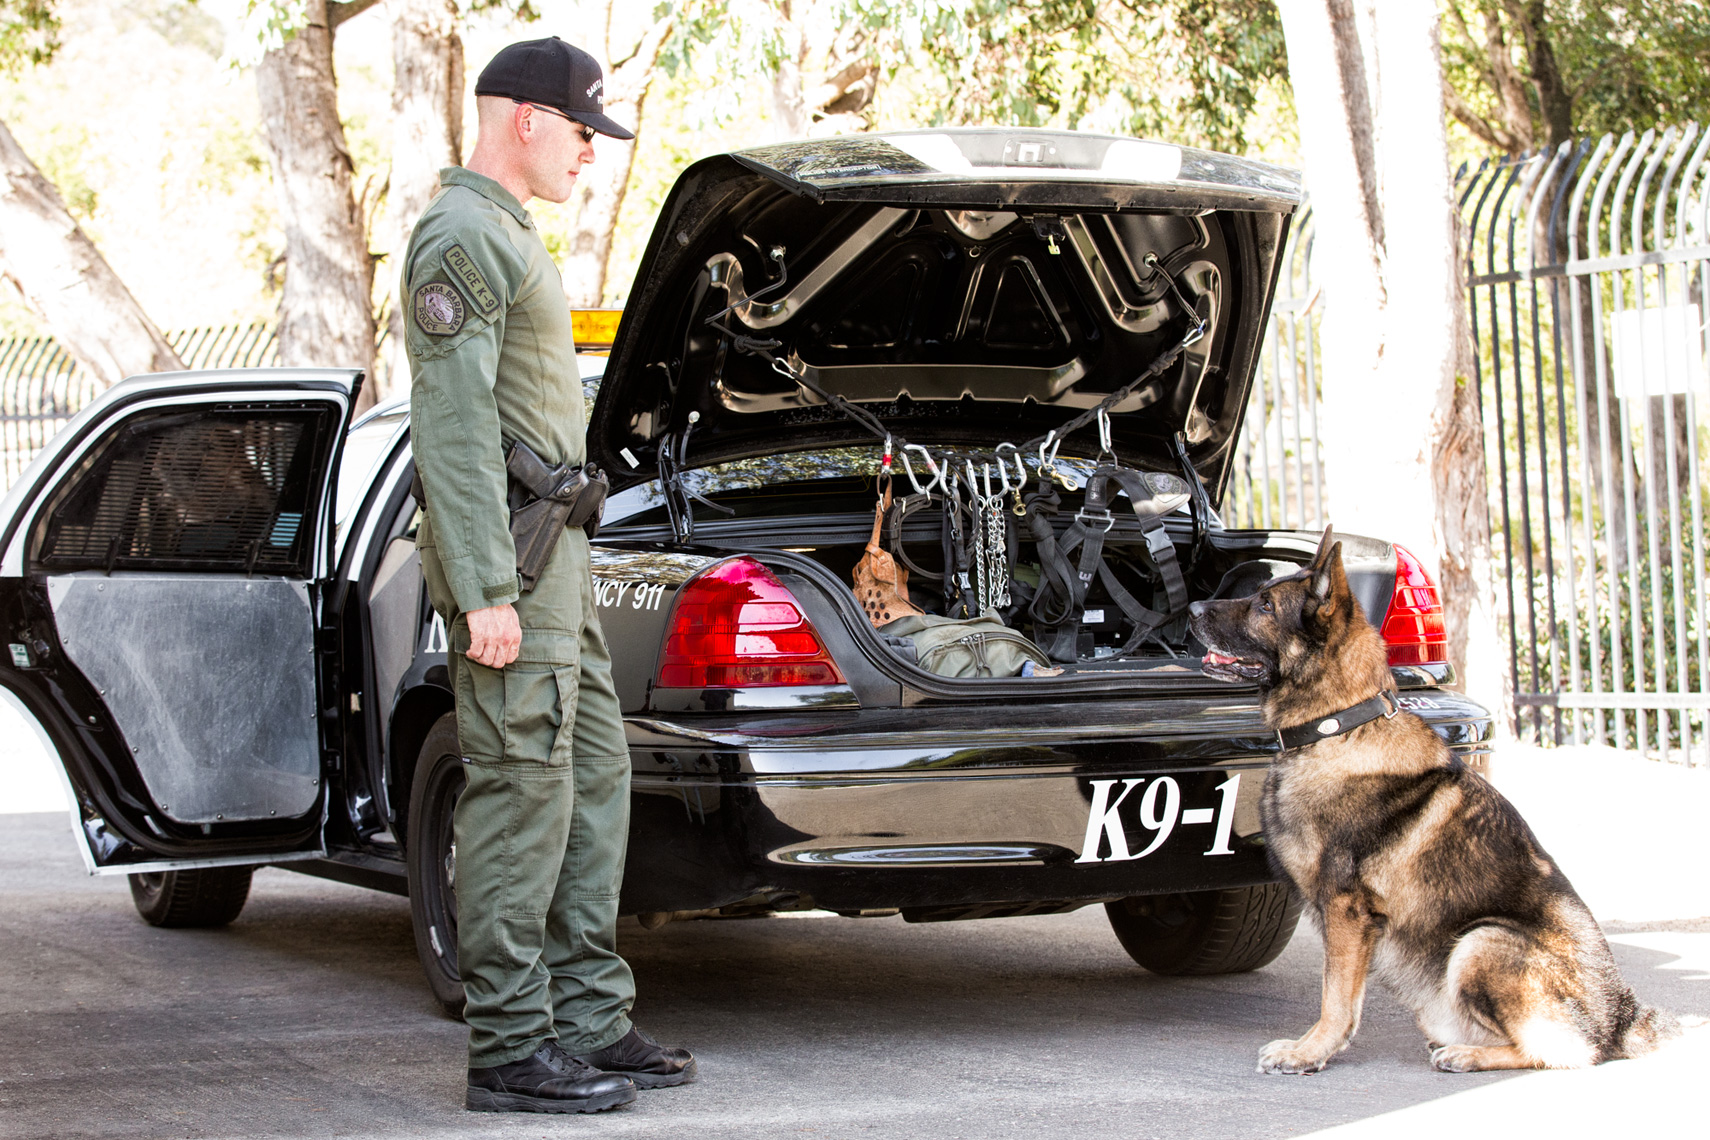 Los Angeles Dog Photography, Michael Brian, Santa Barbara Police K-9 Brag prepares for training with officer David Hedges